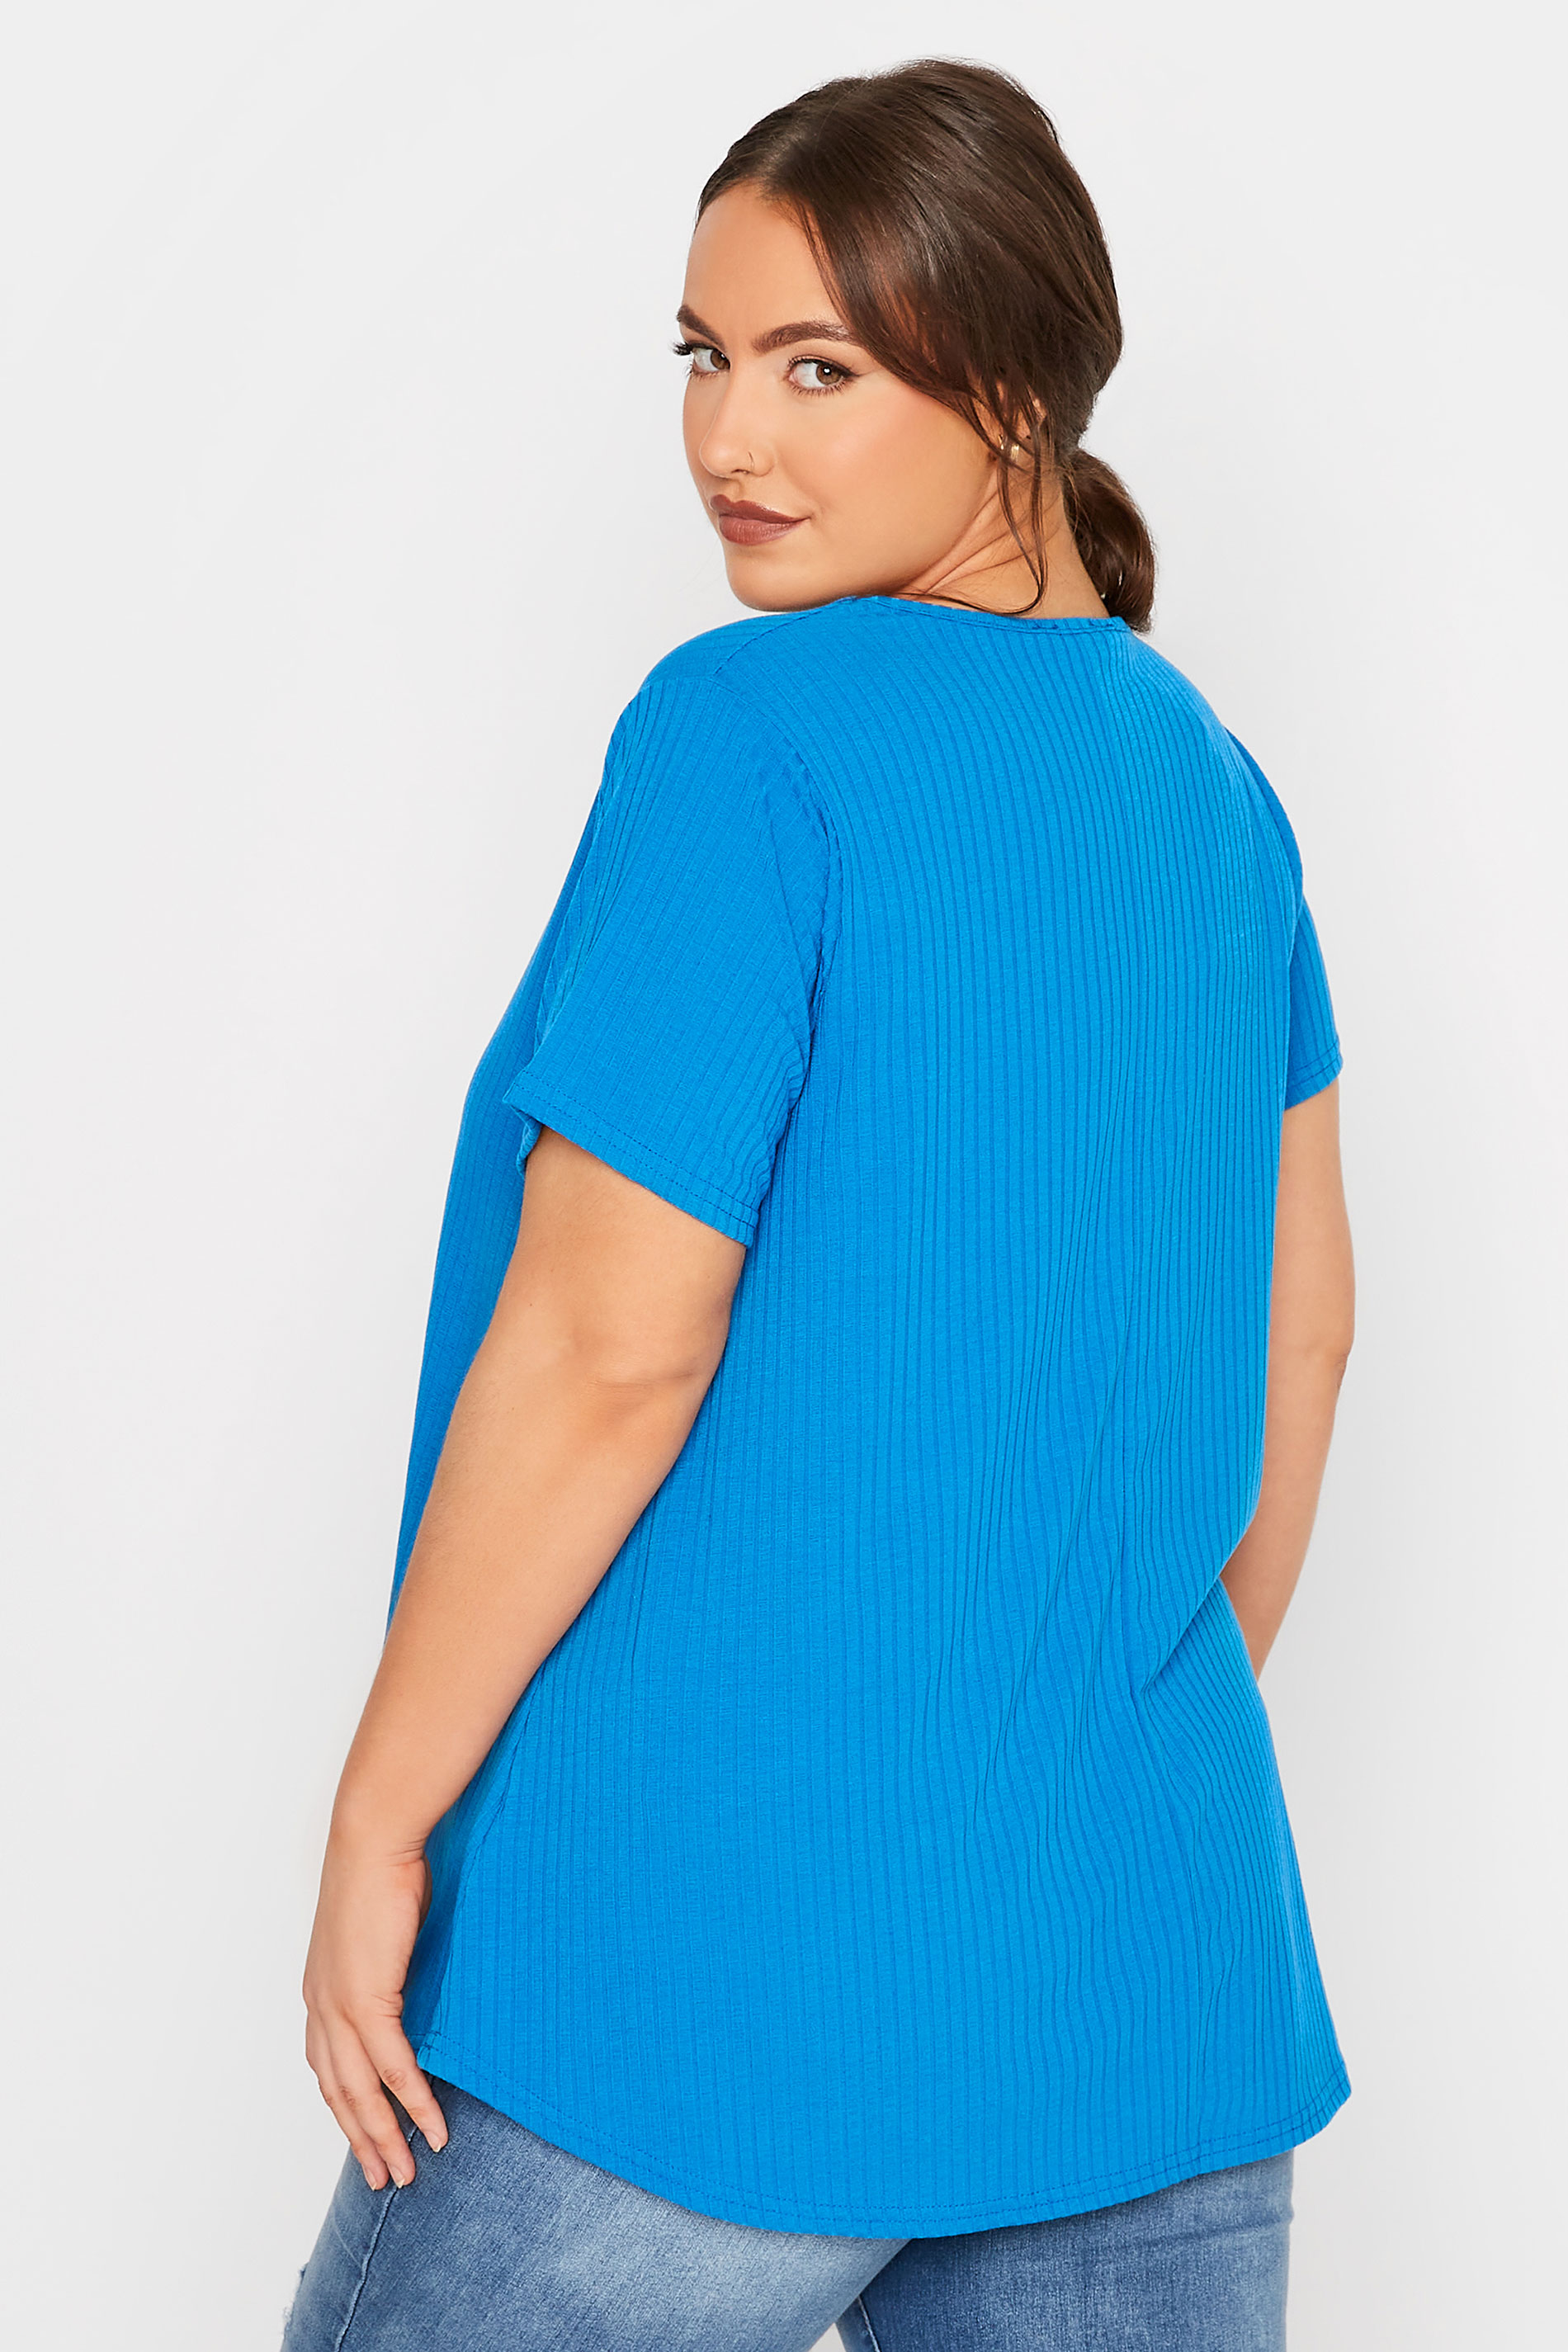 Grande taille  Tops Grande taille  T-Shirts | LIMITED COLLECTION - Top Bleu Roi Nervuré Style Volanté - MH55224